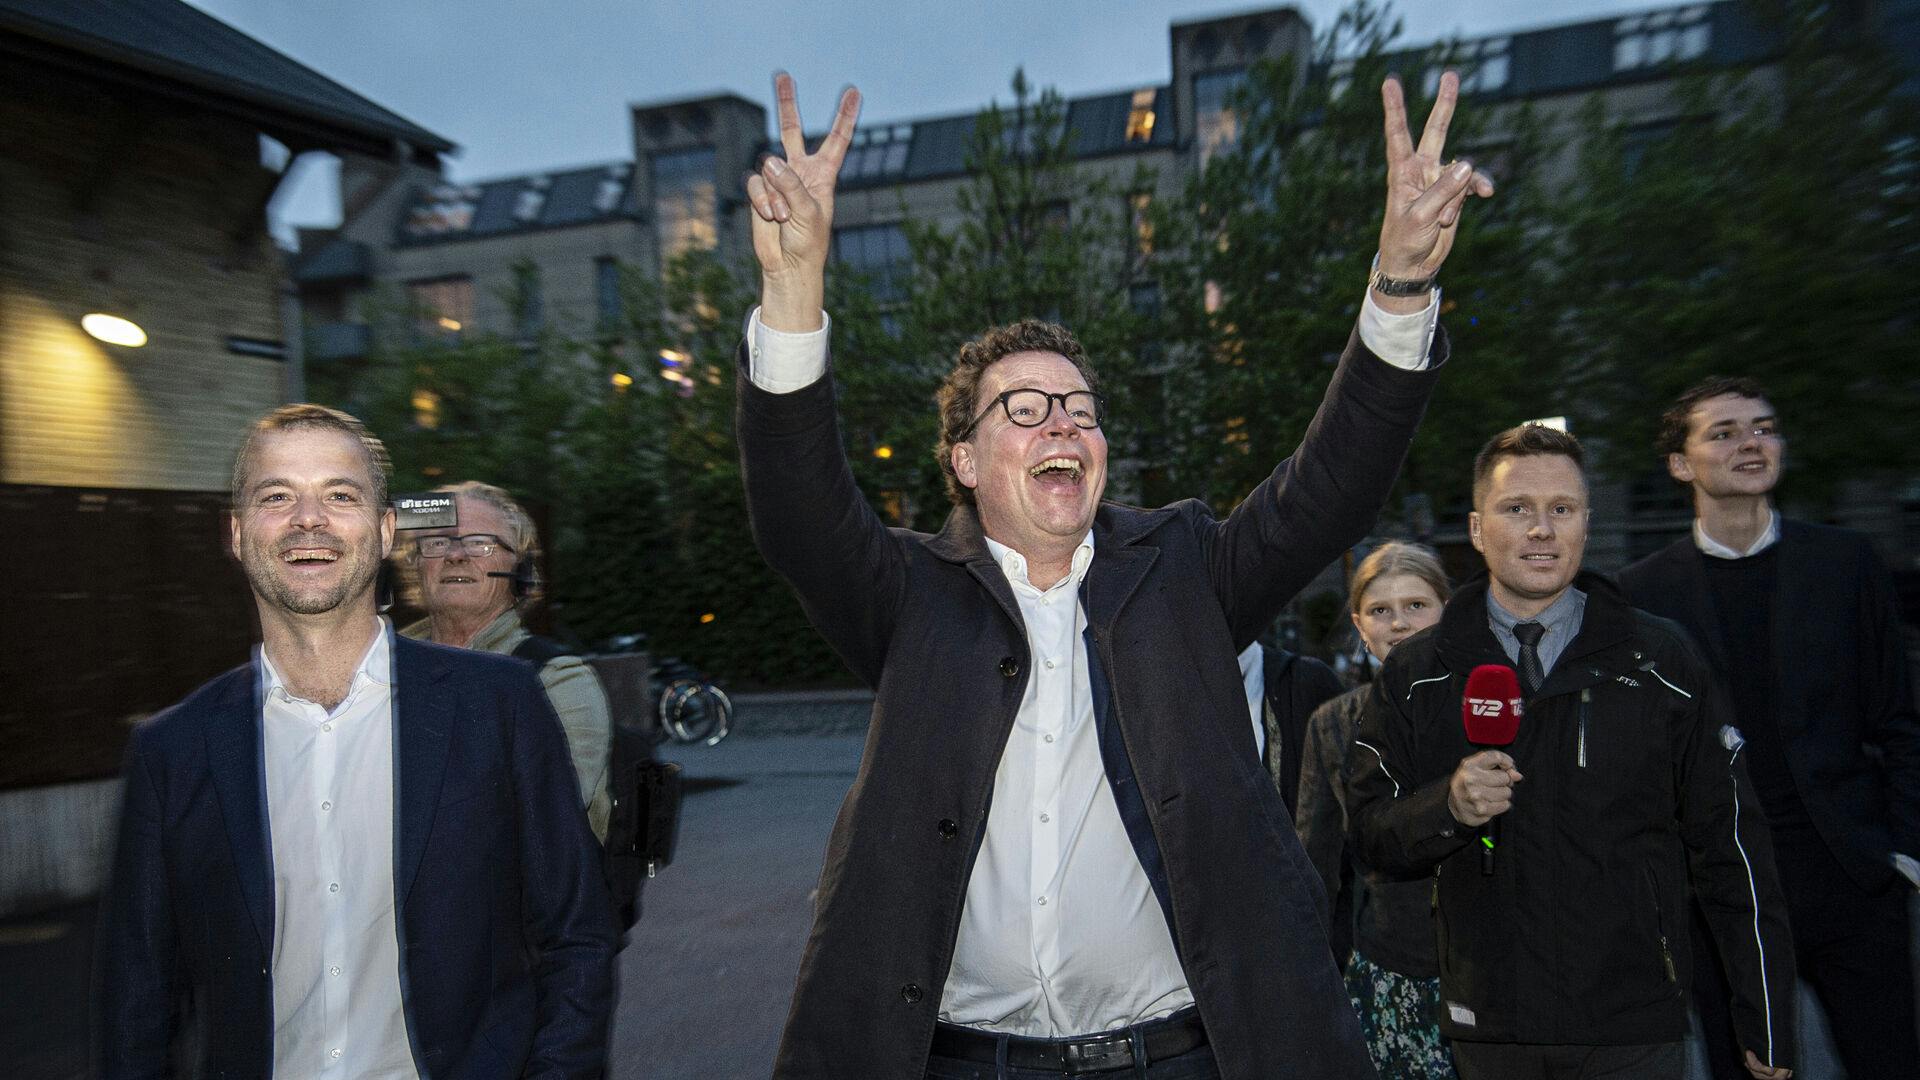 Morten Helveg og Morten Østergaard, i baggrunden, ankommer ved EP-valget til H15 i Kødbyen.